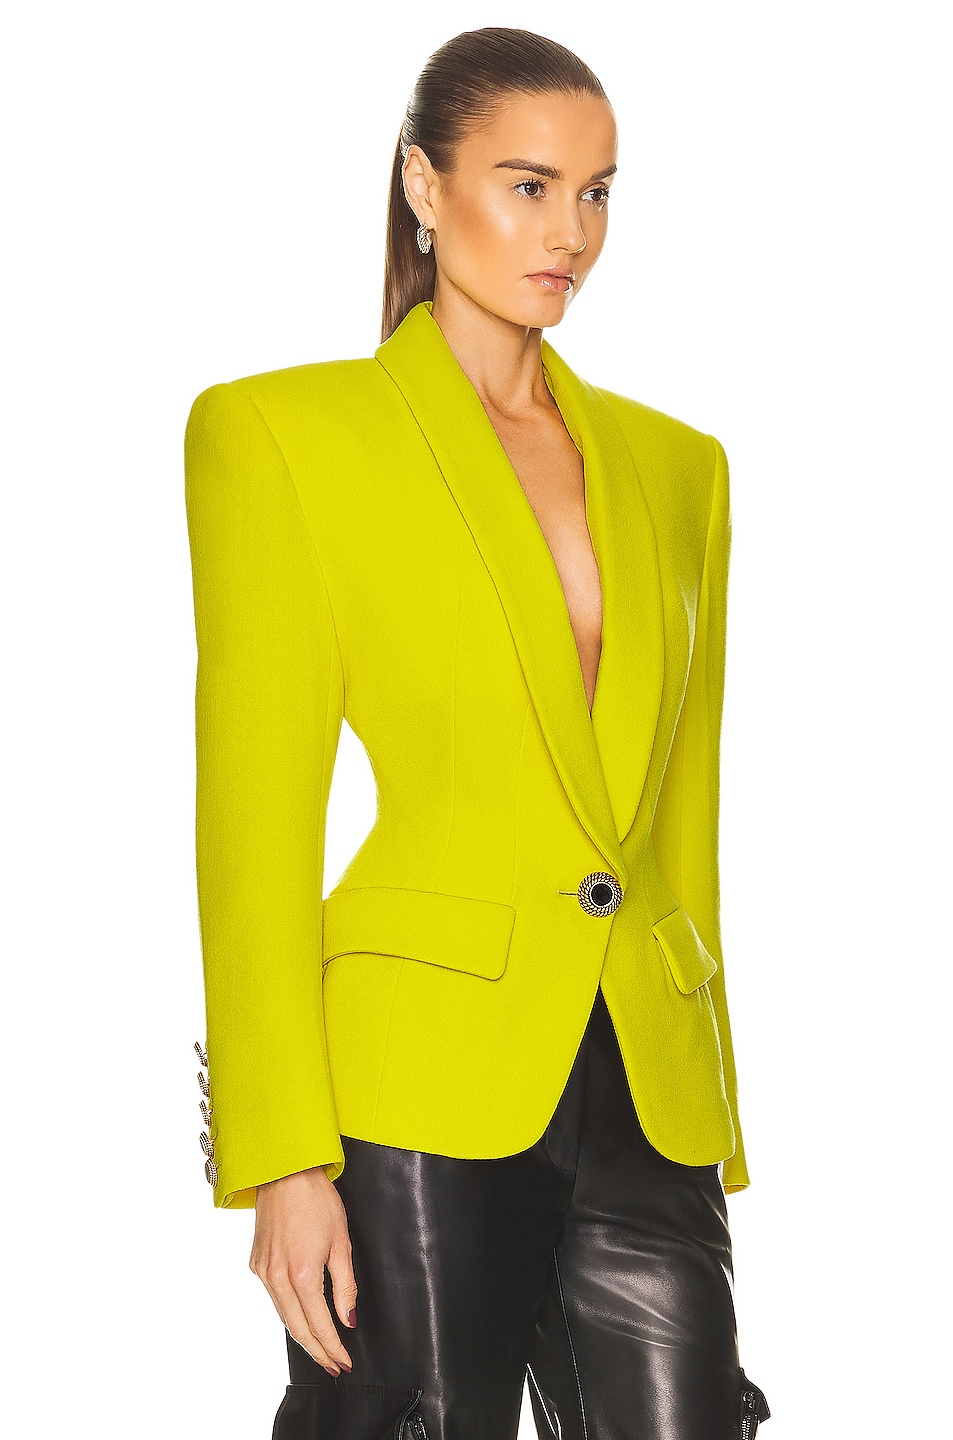 Alexandre Vauthier Couture Edit Oversize Jacket in Lemon Tonic | FWRD